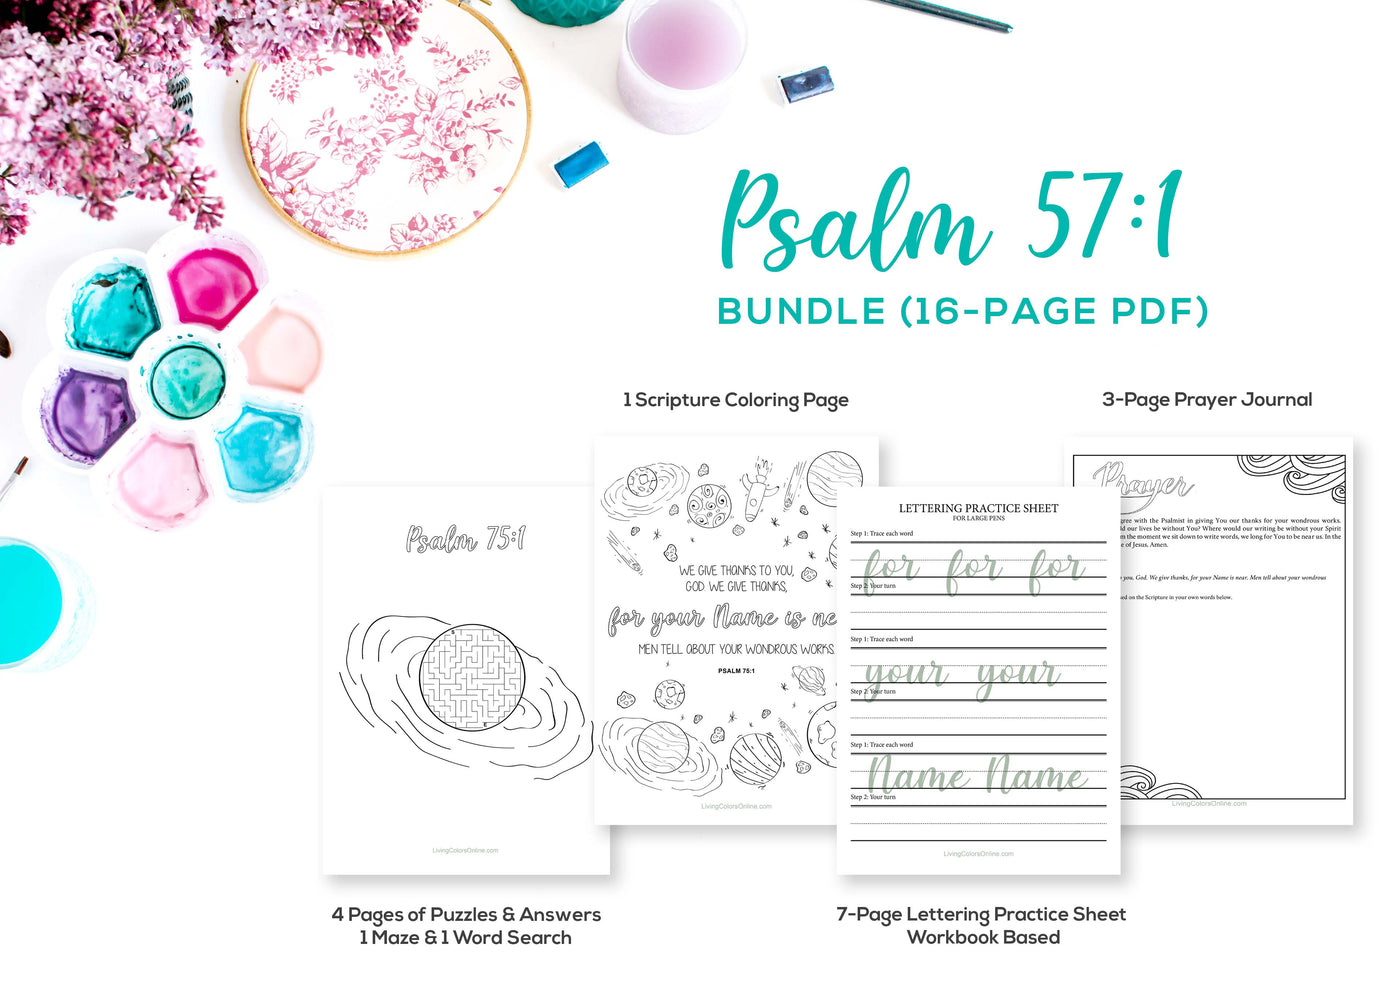 Scripture Printable Bundle #9 (Psalm 75:1)